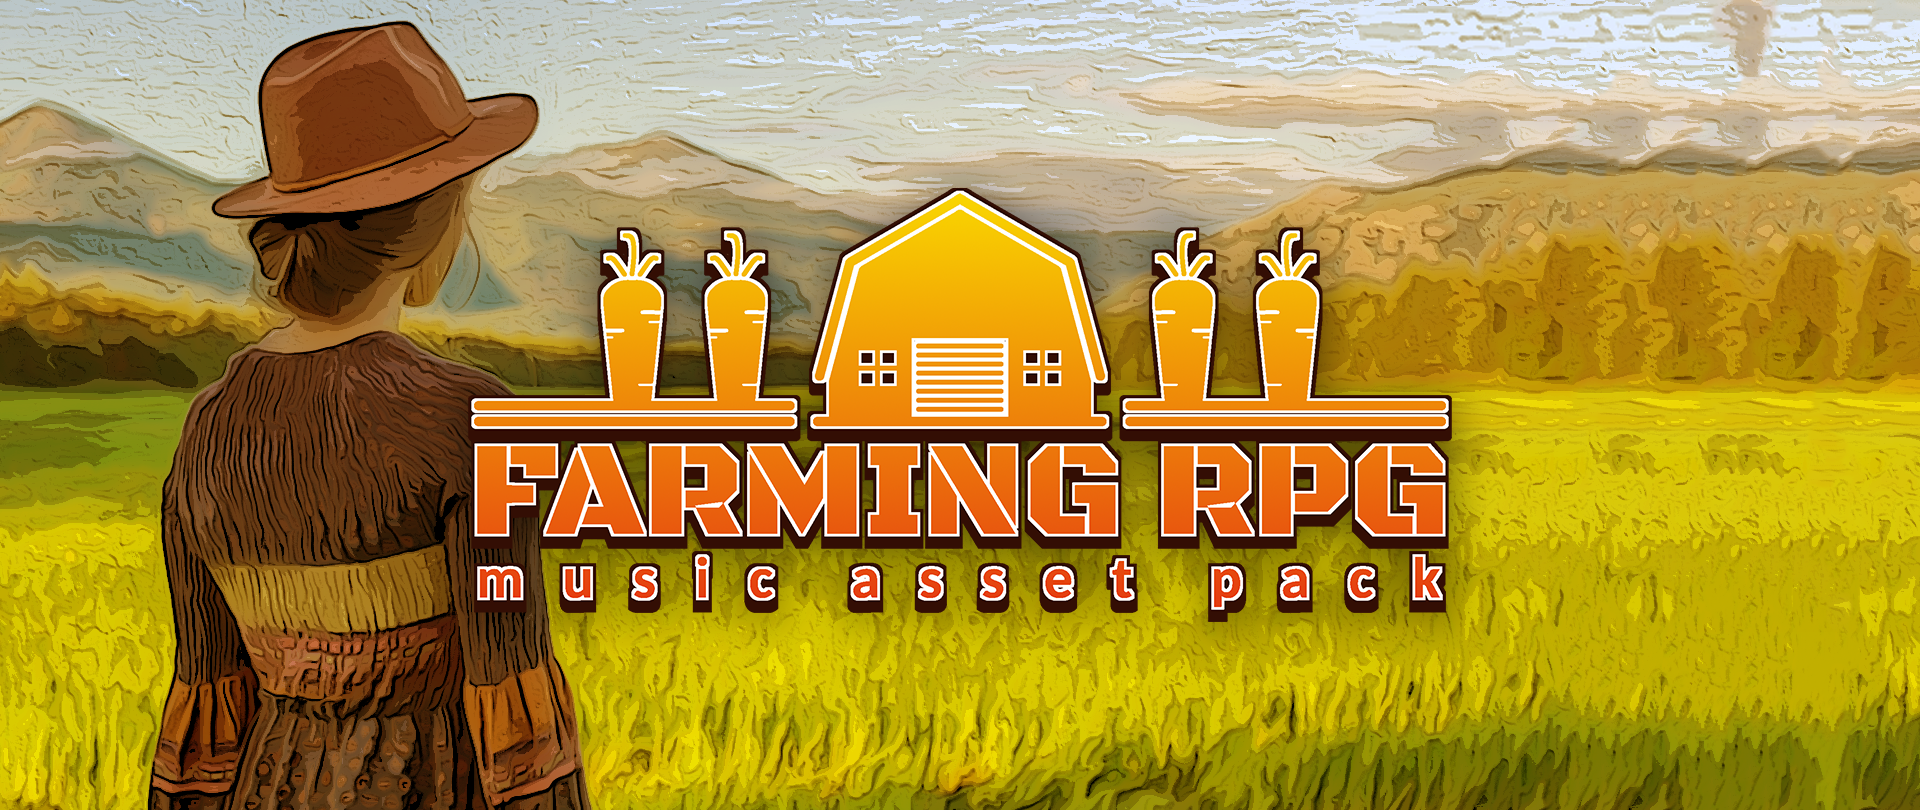 Farming RPG Music Pack 4